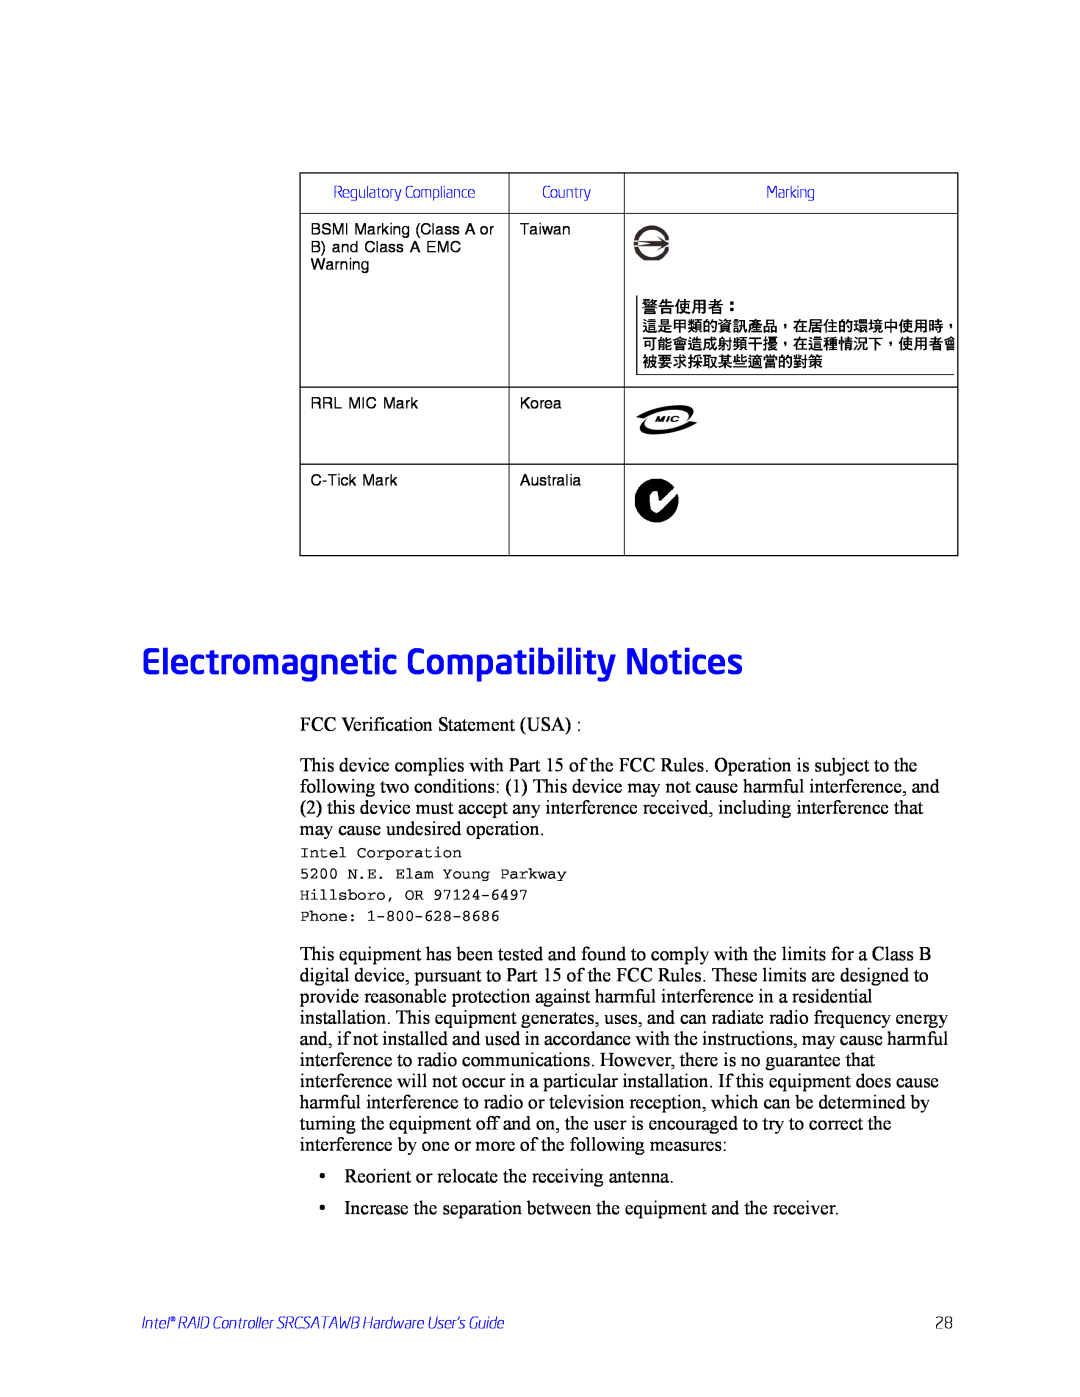 Intel SRCSATAWB manual Electromagnetic Compatibility Notices 